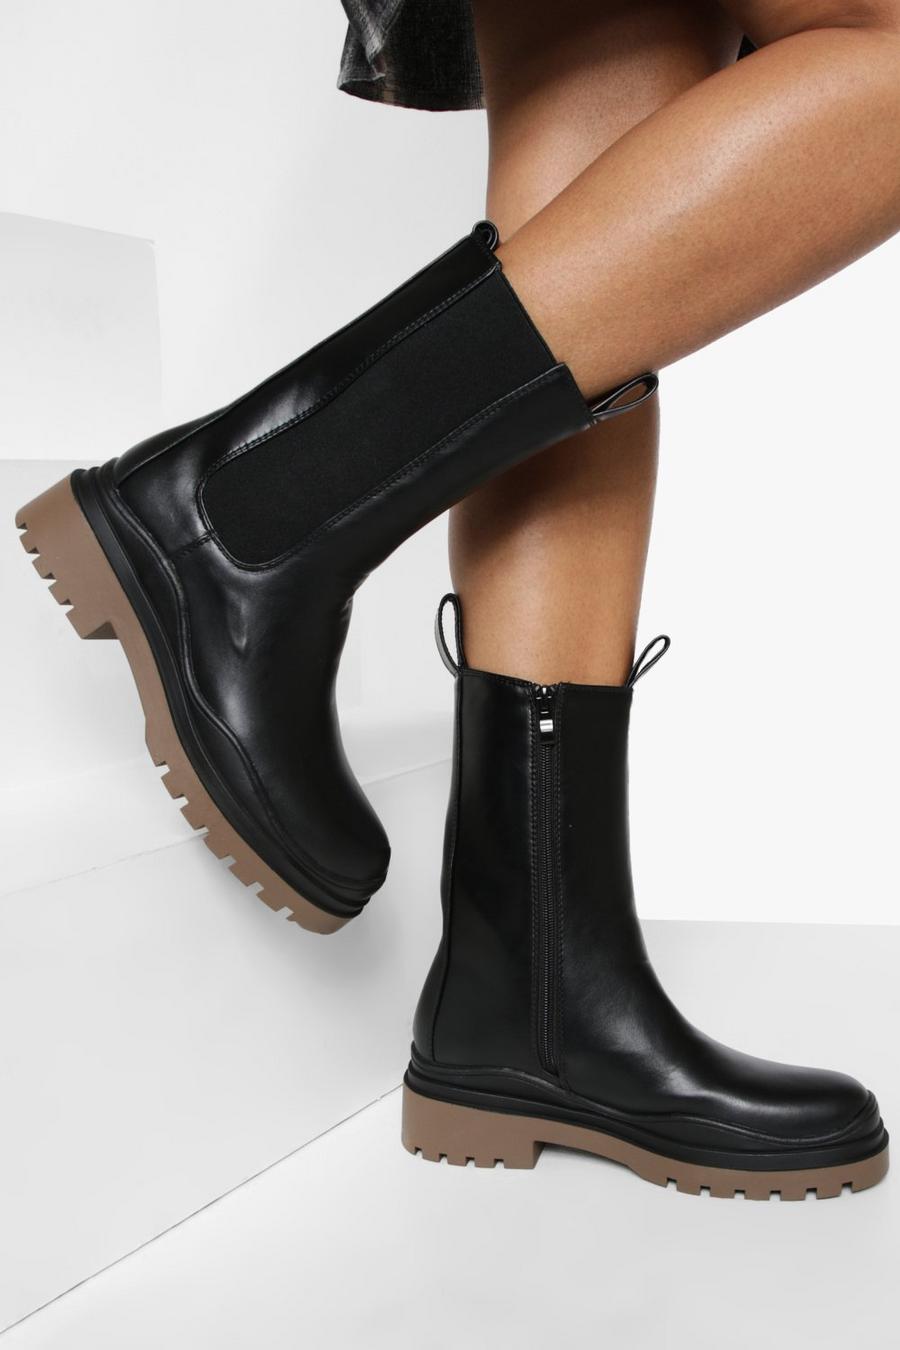 Black noir Contrast Sole Calf Height Chelsea Boots